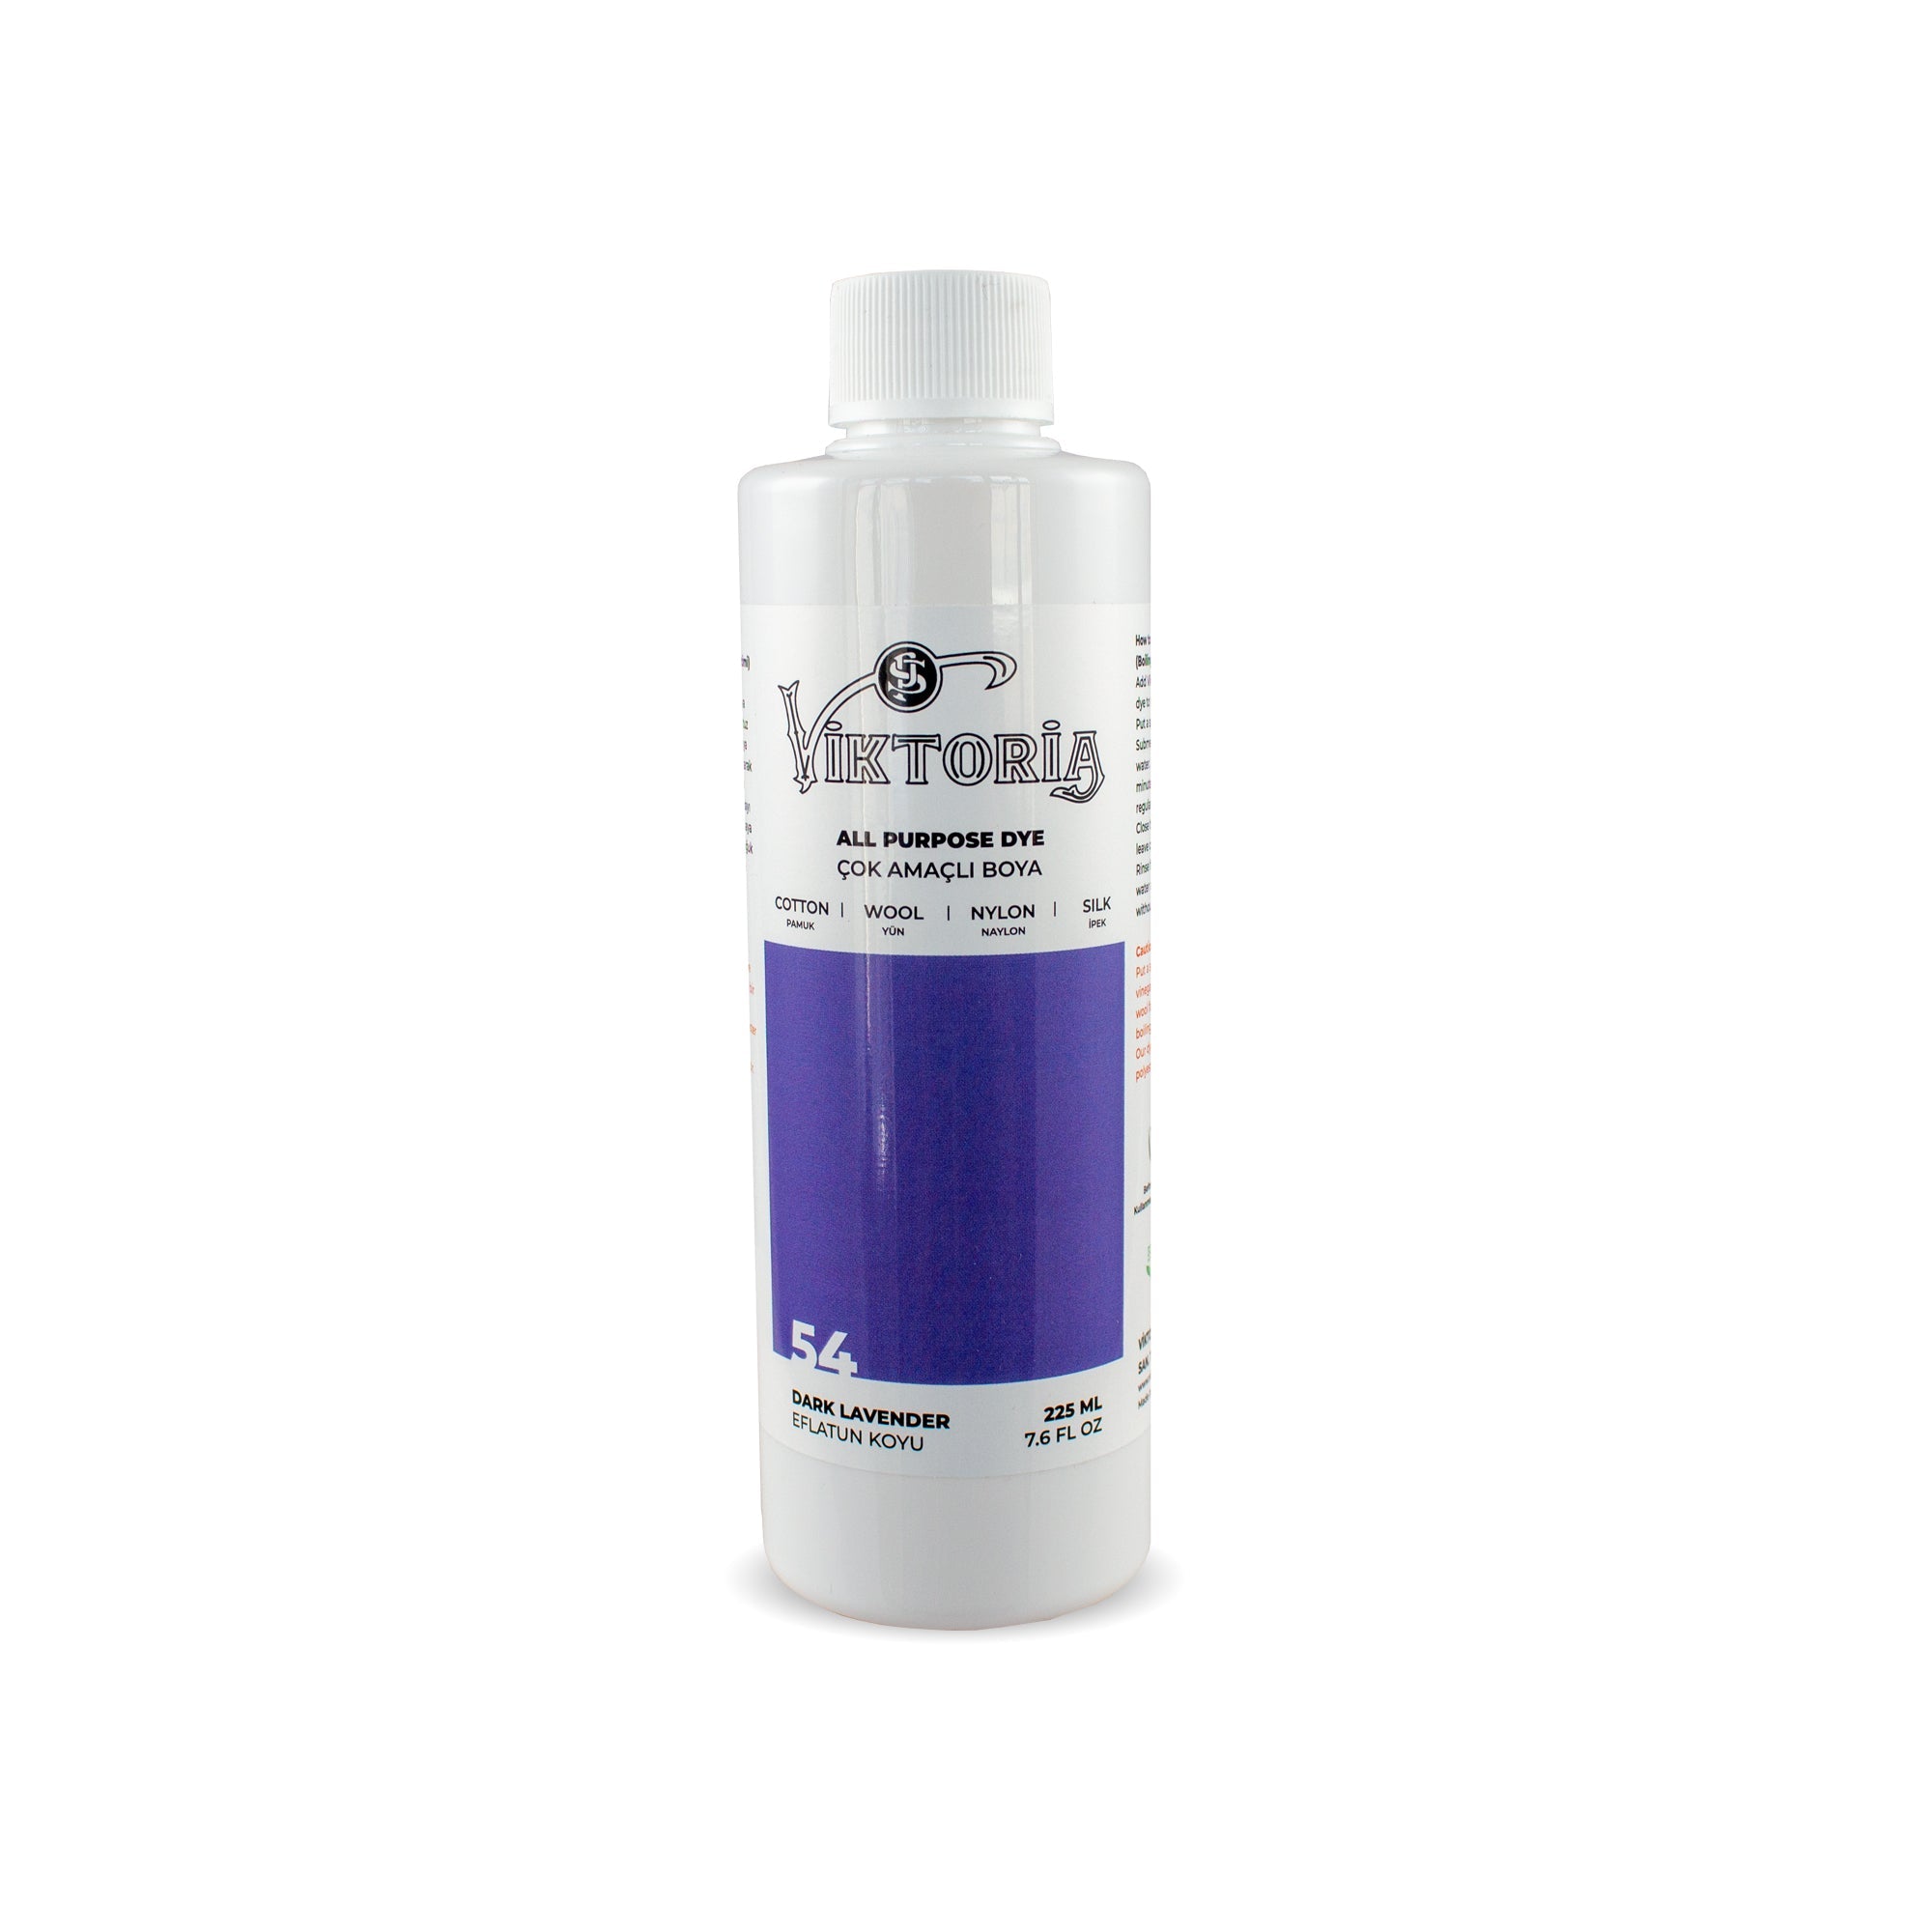 Lilac fabric dye